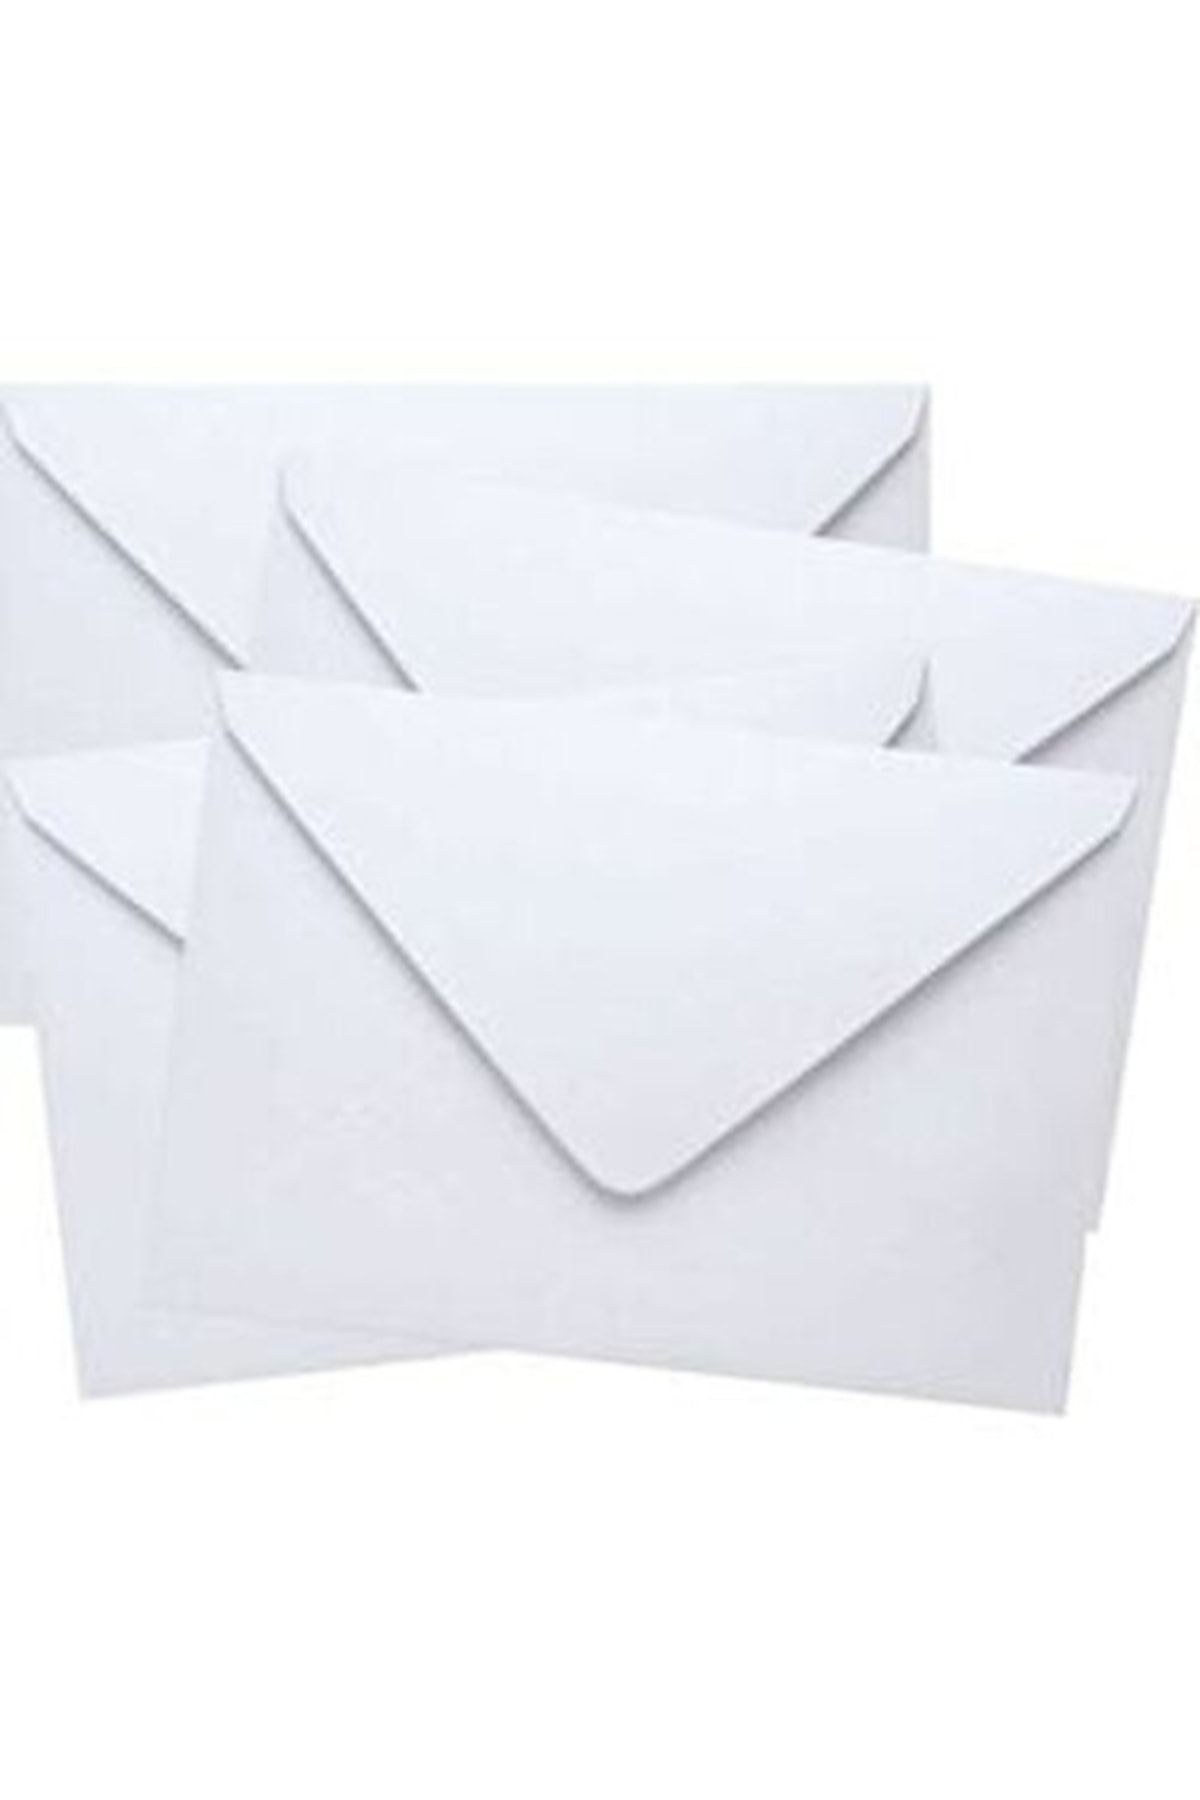 Halay Kına Atkı Zarfı Para Zarfı Beyaz 100 Adet 12x18cm